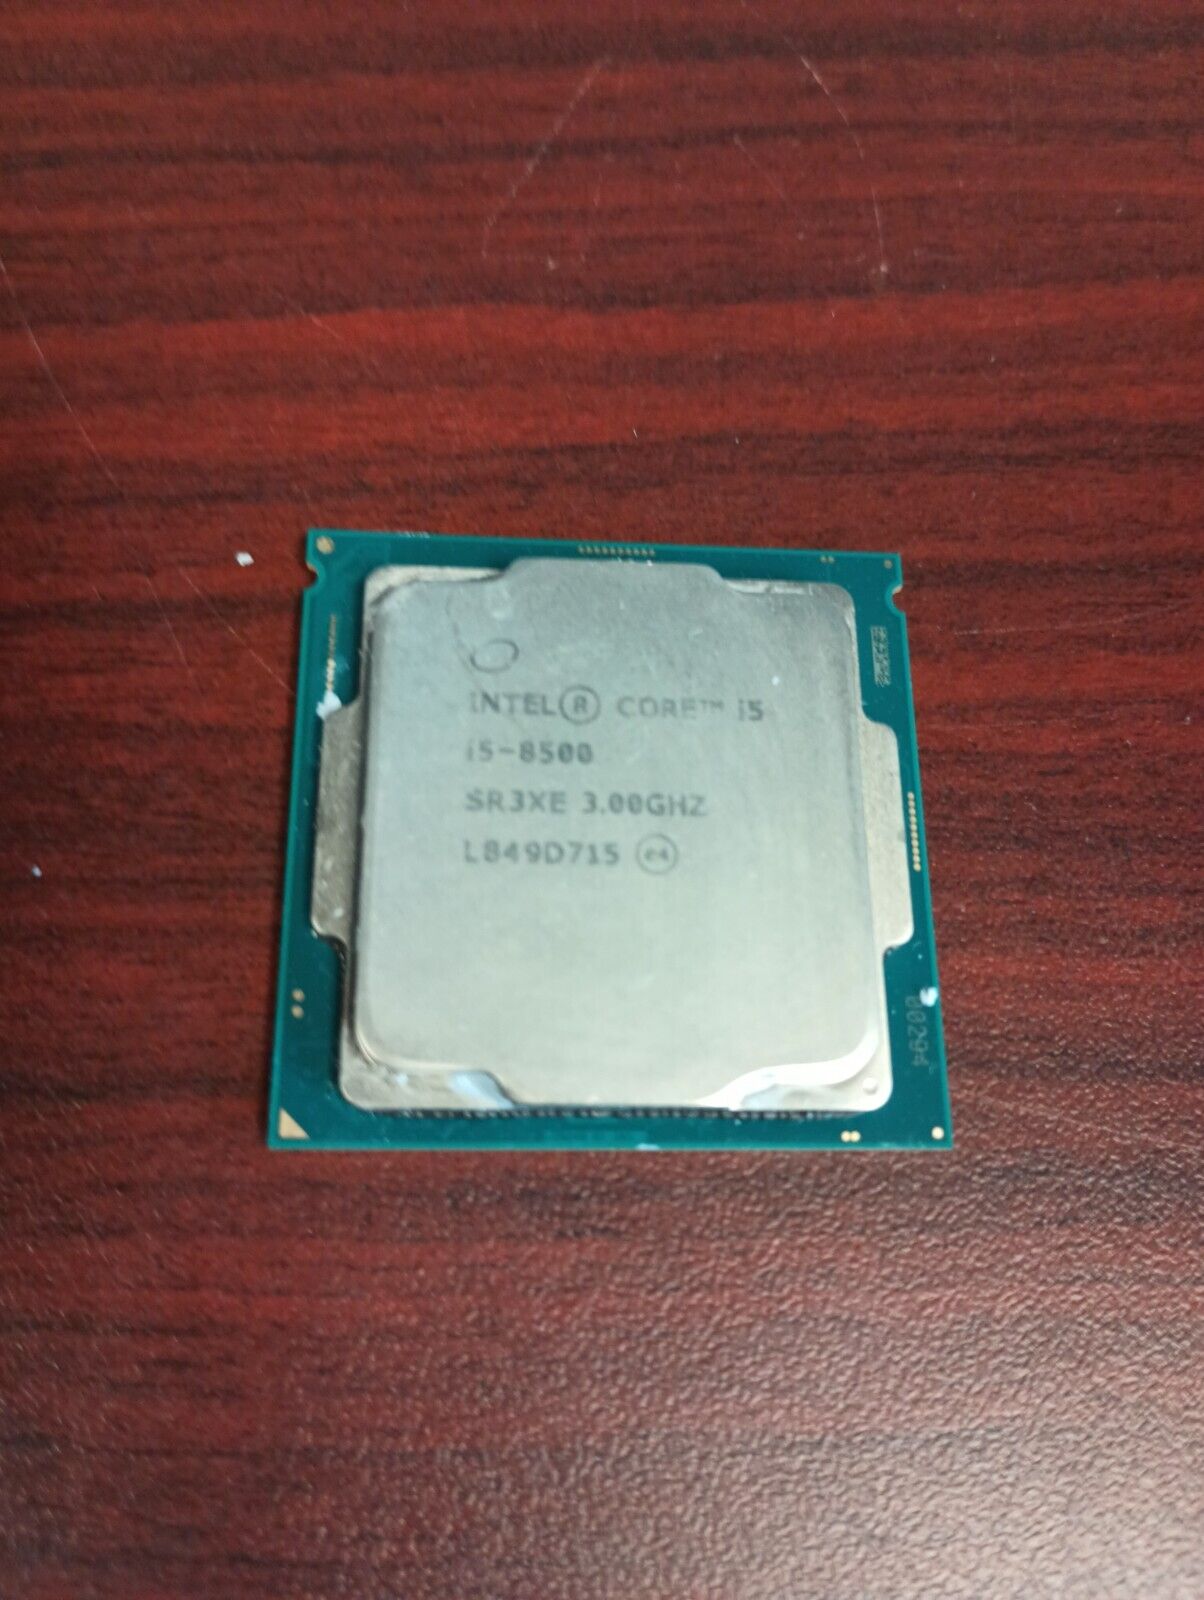 Intel Core i5-8500 @ 3.00GHz - SR3XE CPU - Processor #95